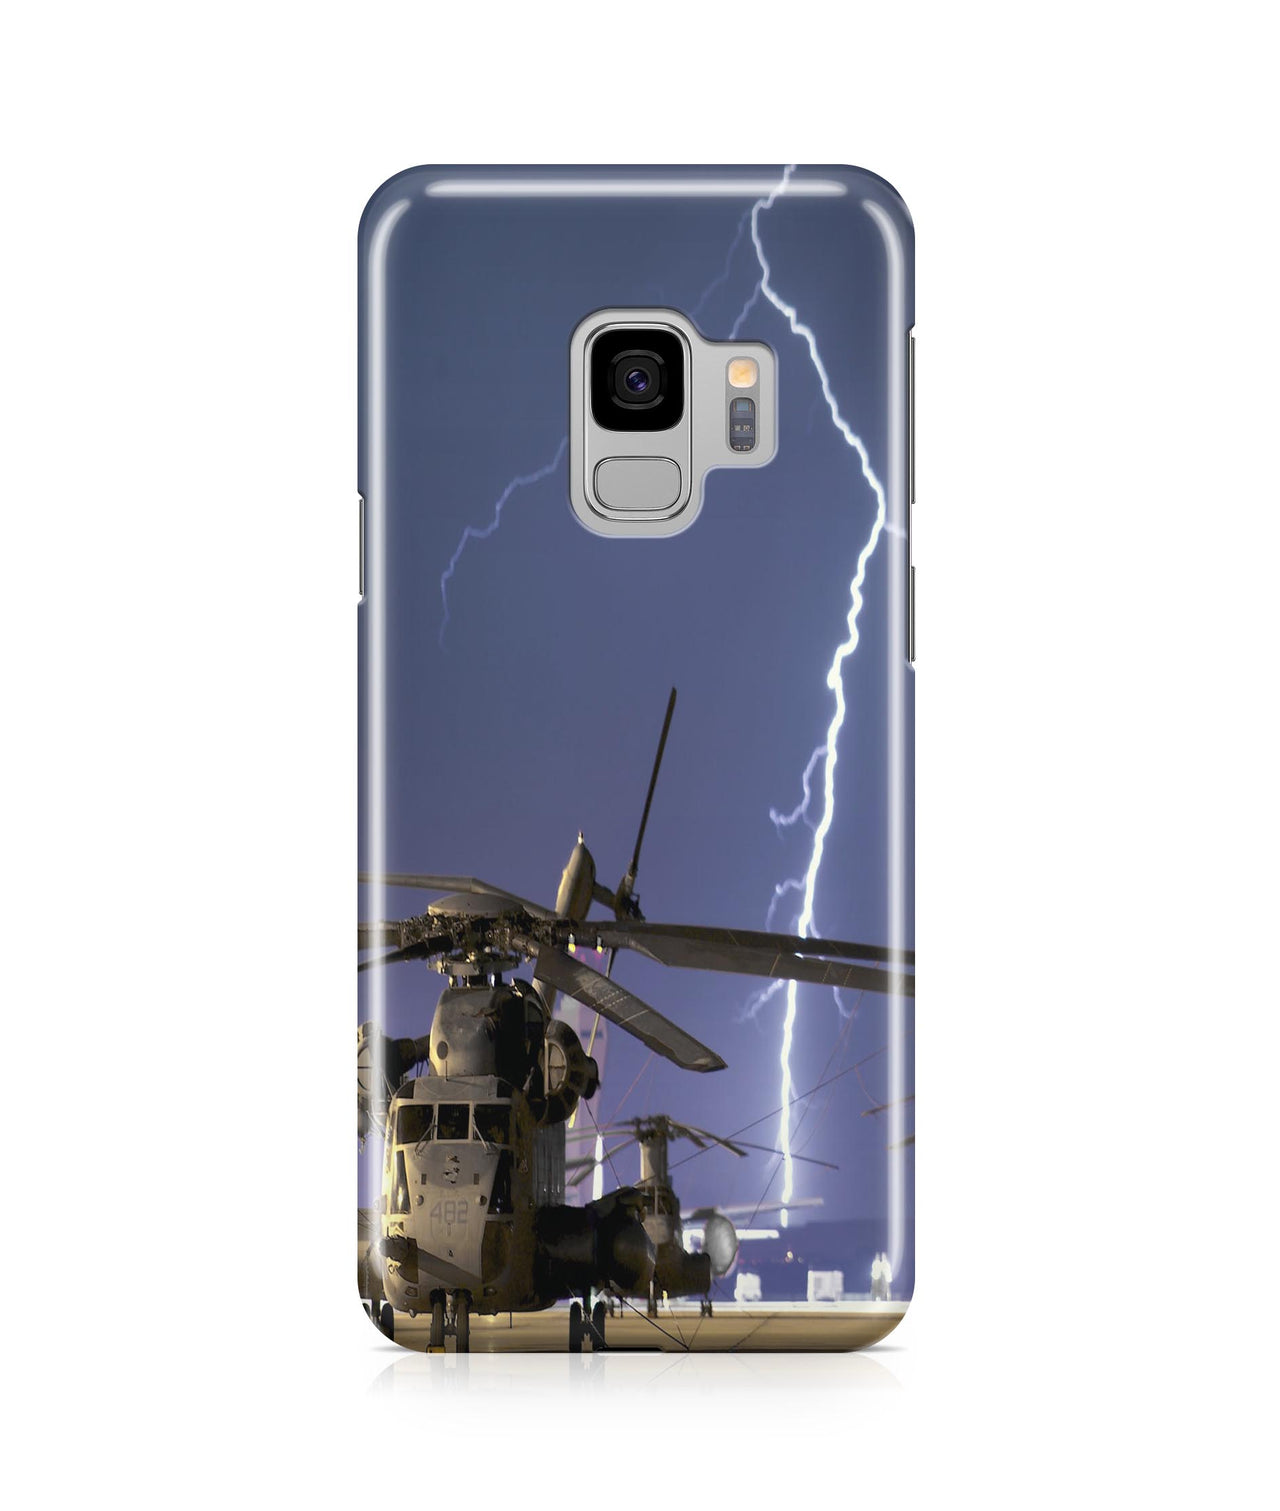 Helicopter & Lighting Strike Printed Samsung J Cases